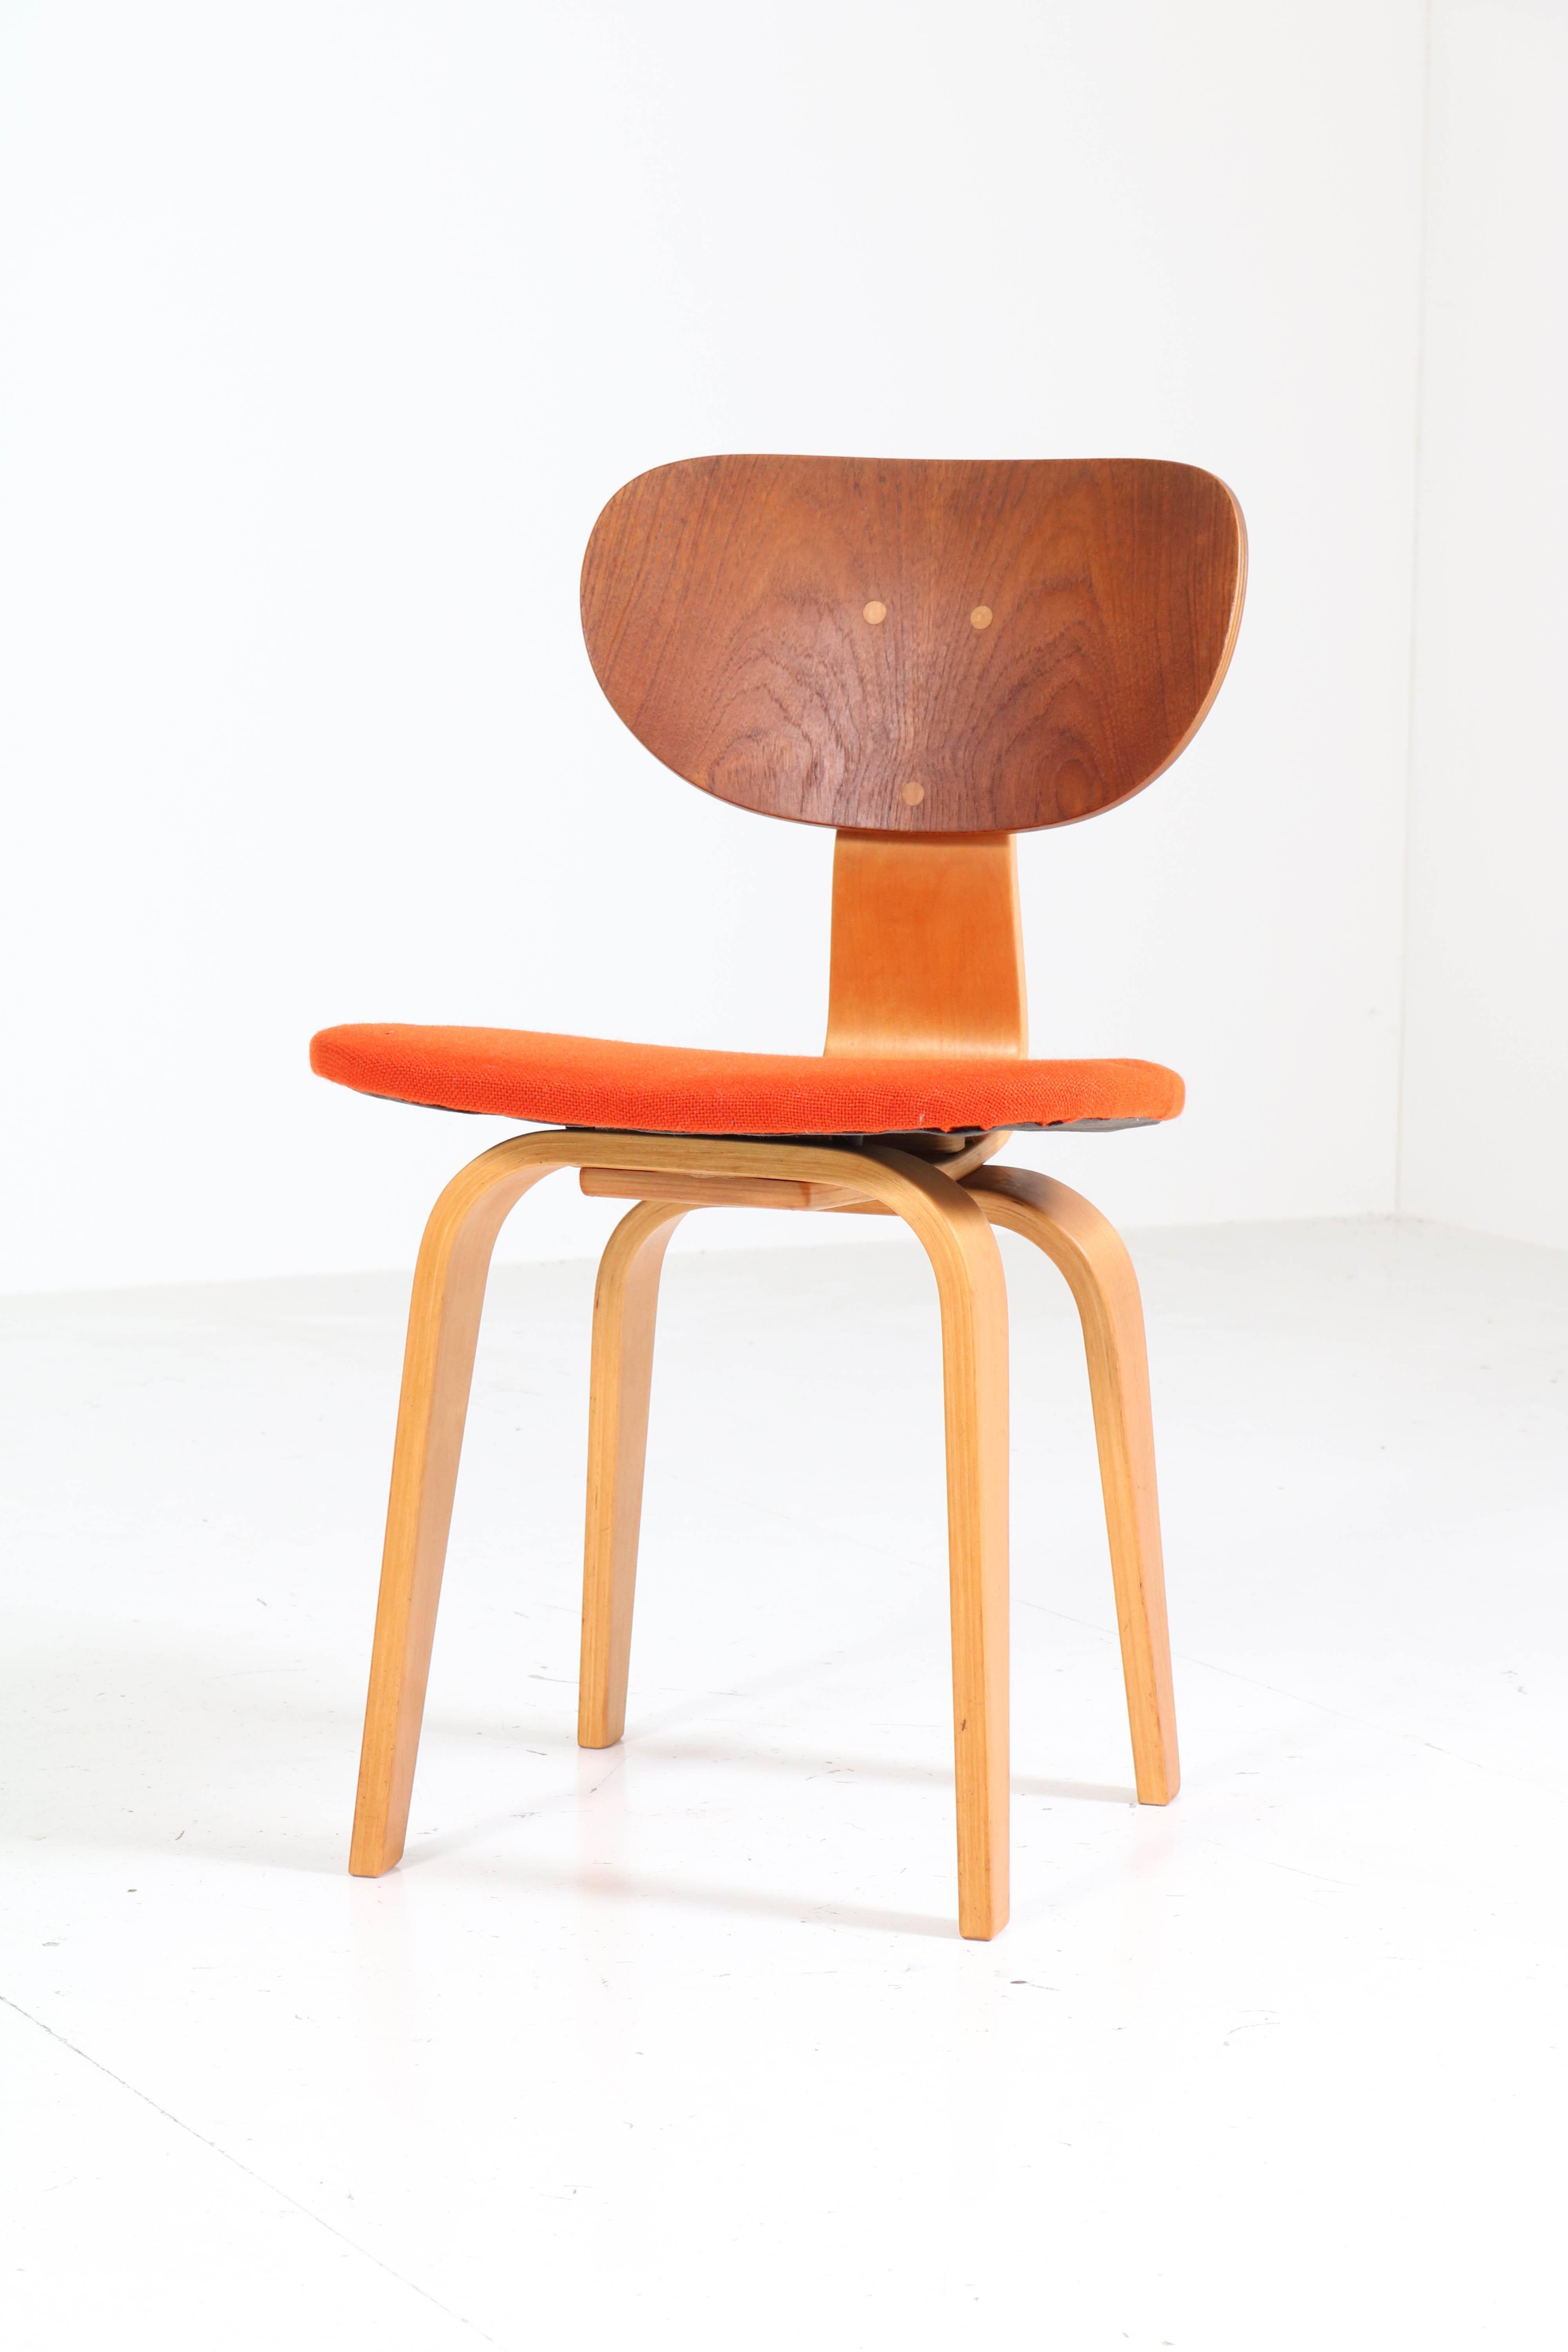 Dutch Birch and Teak Mid-Century Modern Sb02 Chair by Cees Braakman for Pastoe, 1952